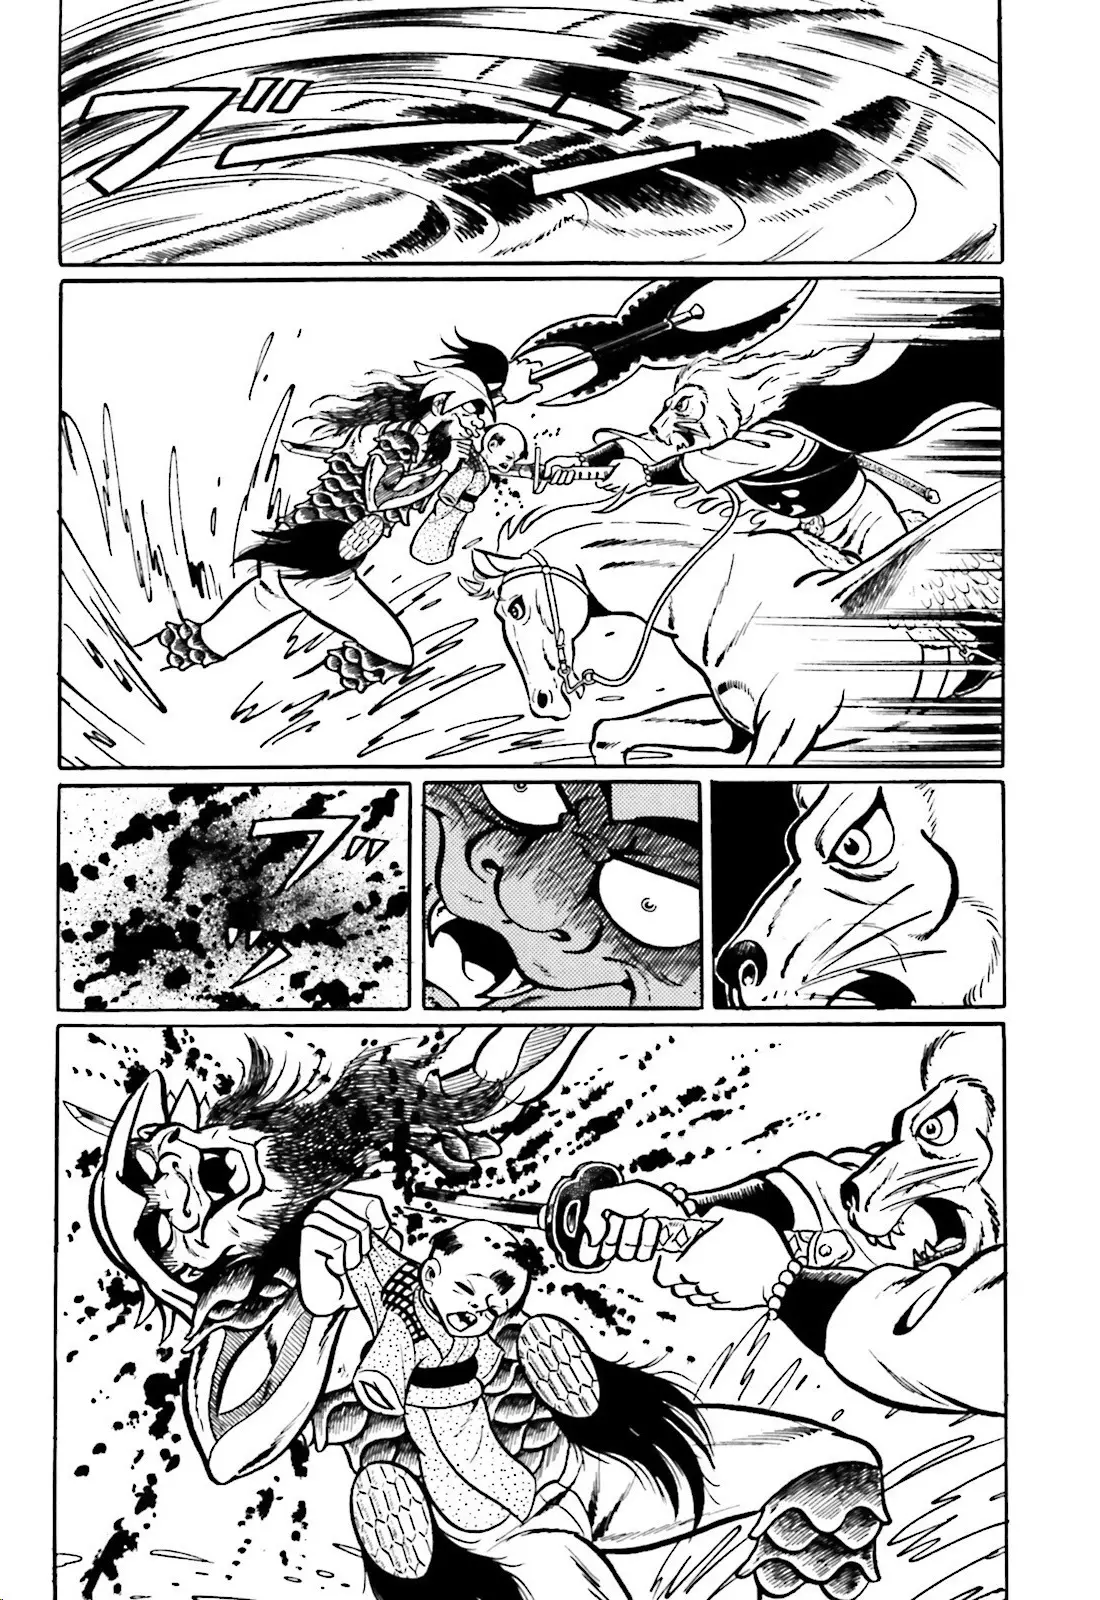 The Vigilant Lionmaru - 1 page 48-33c0bfbd